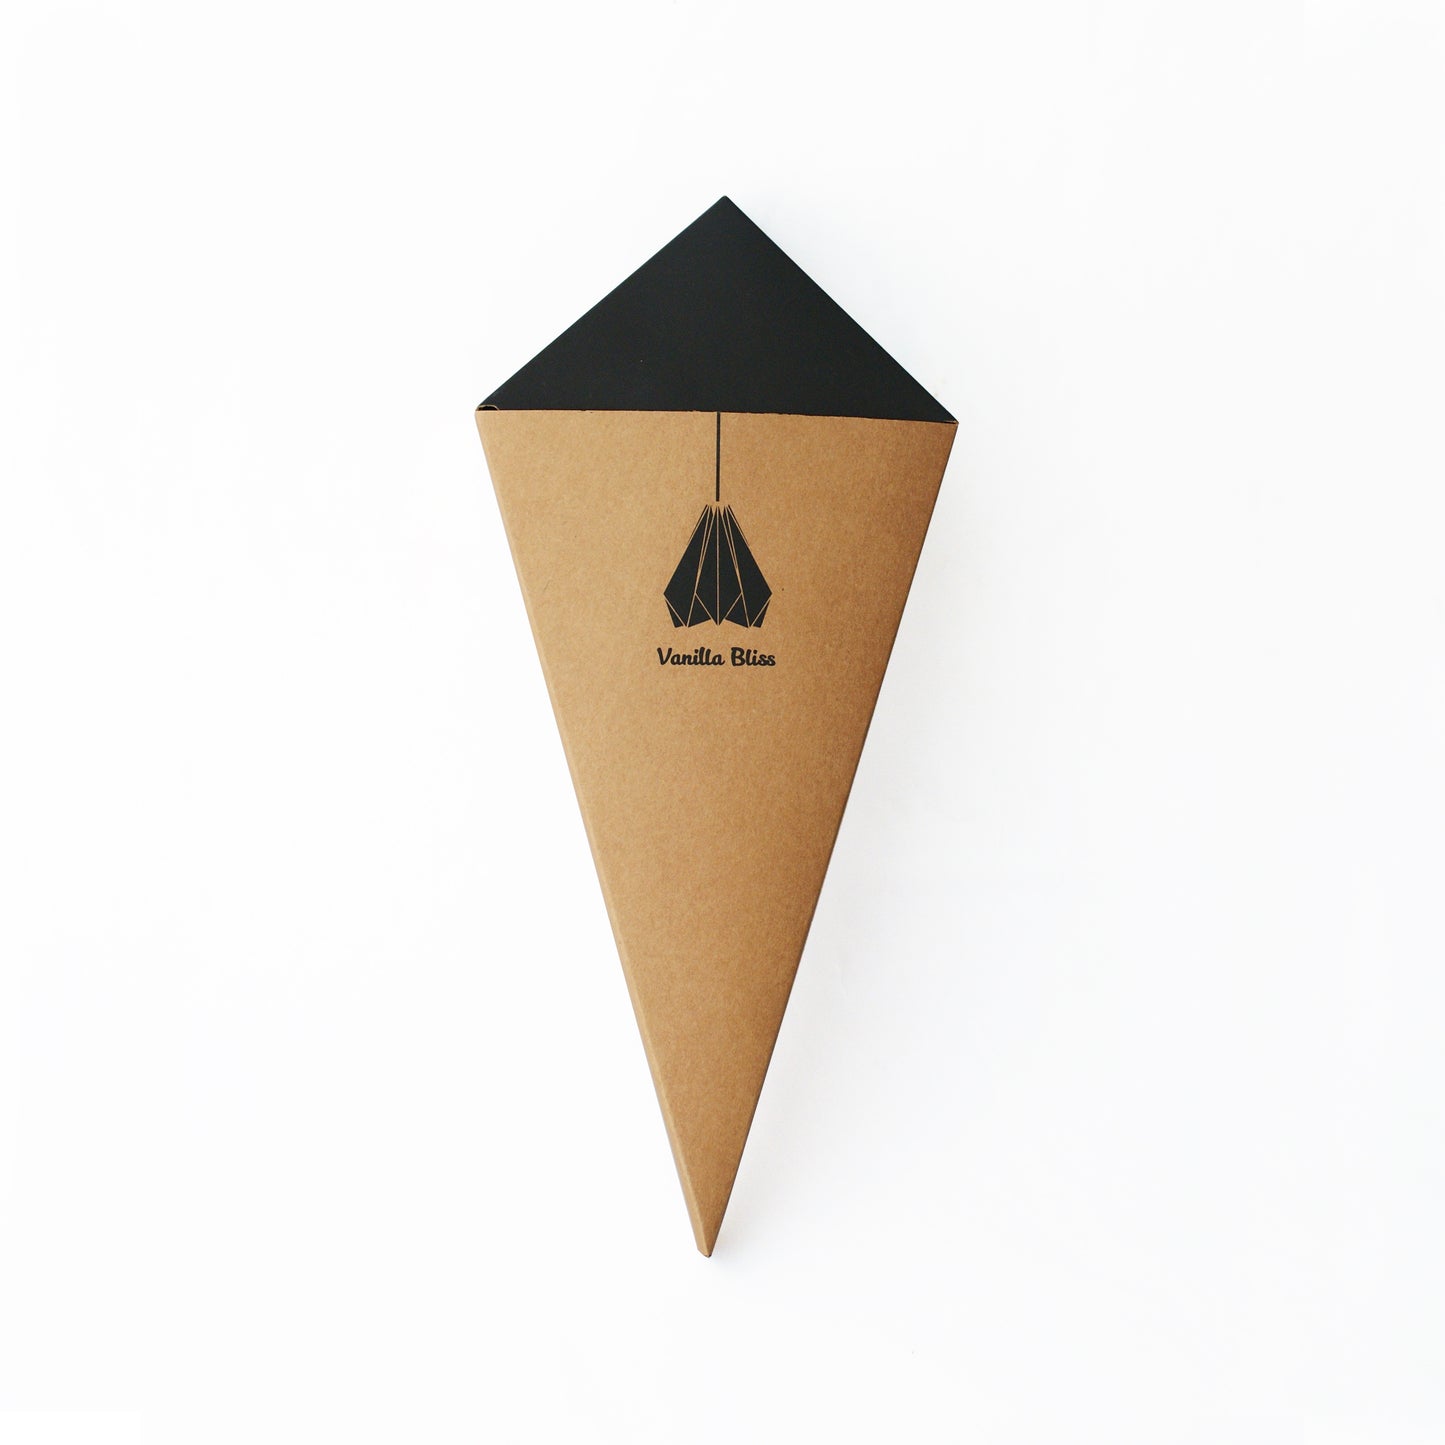 Vanilla Bliss design packaging origami lamp shop online